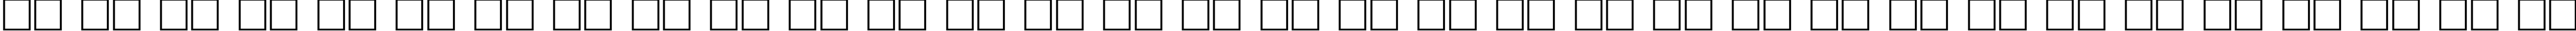 Пример написания русского алфавита шрифтом Aardvark115n